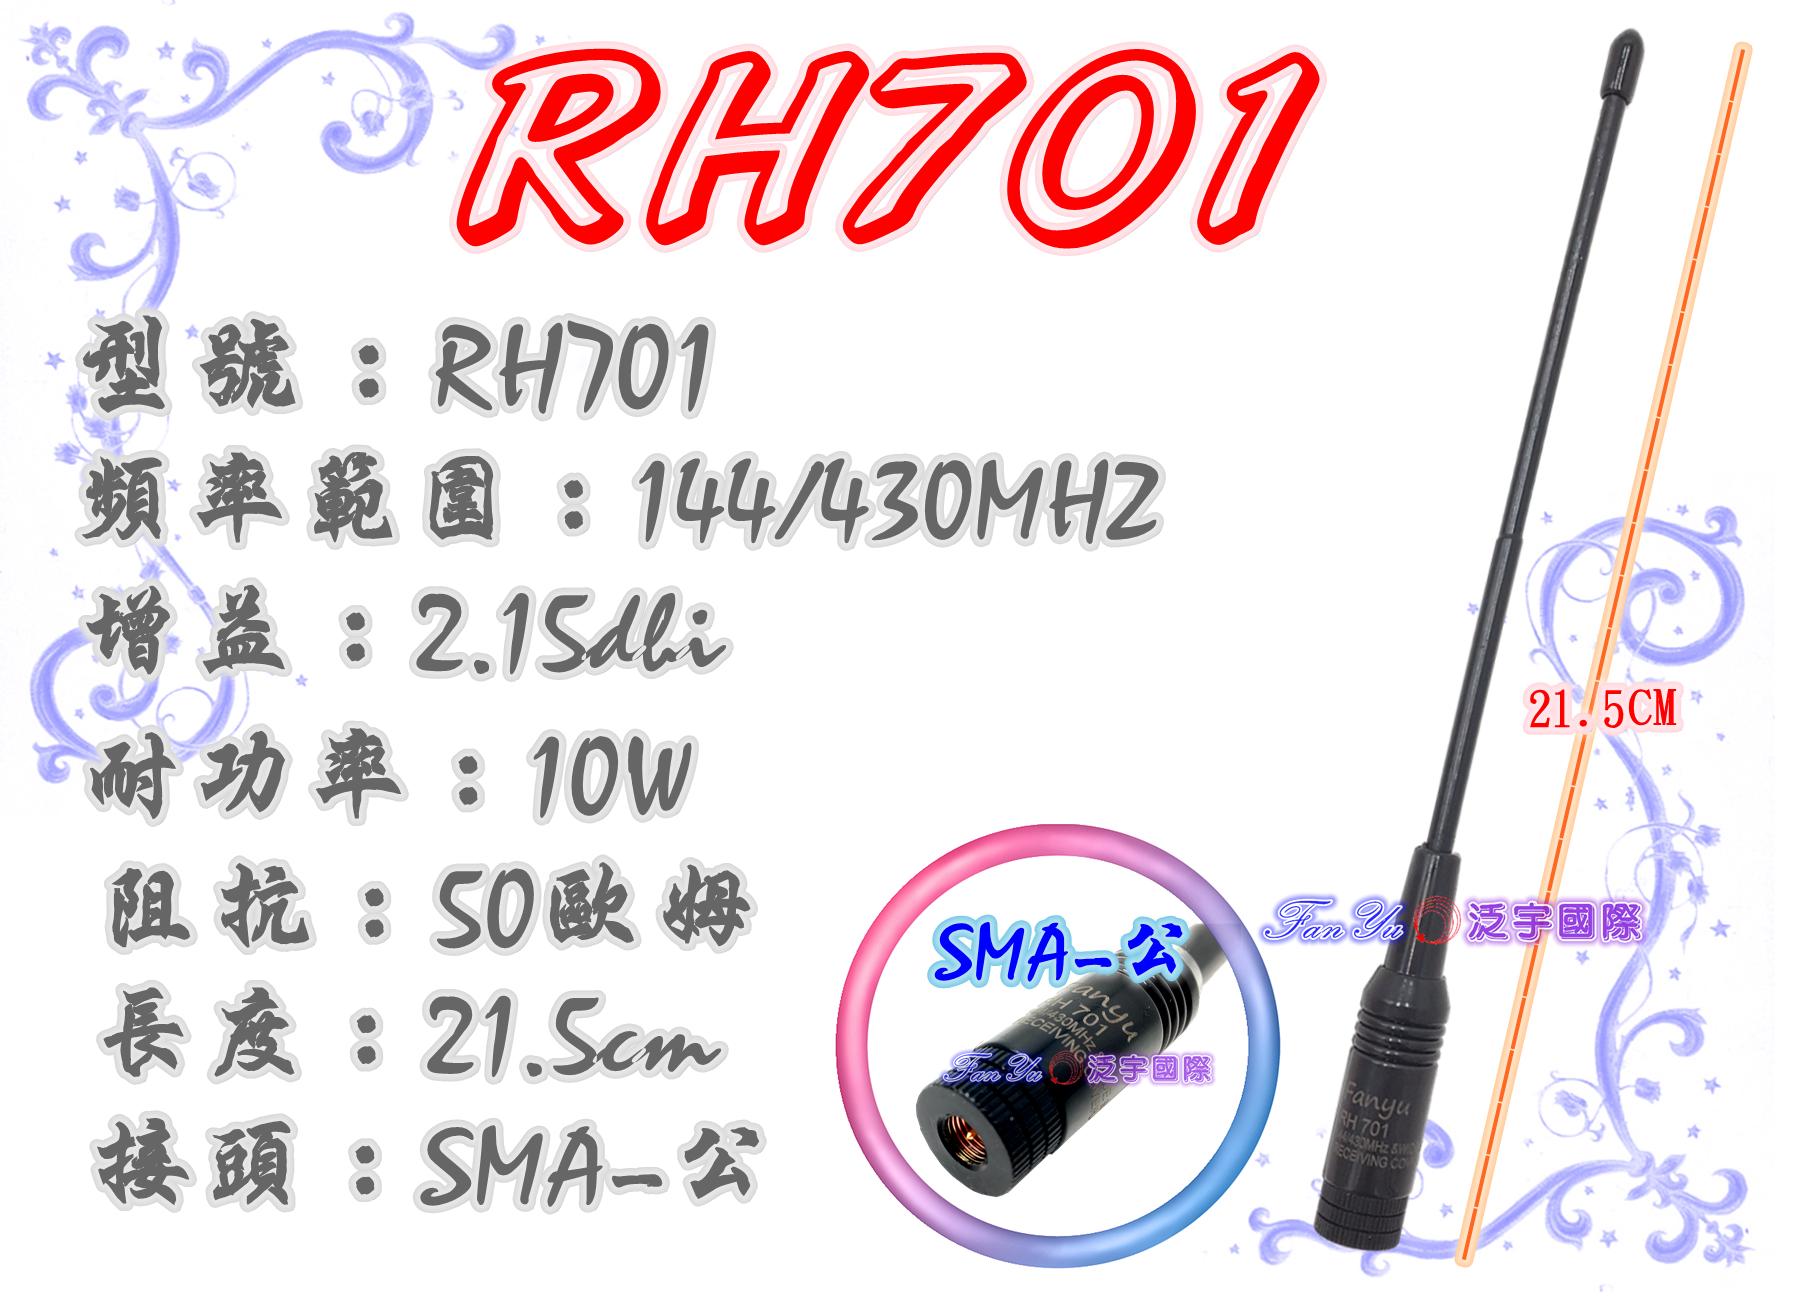 【FANYU】RH701 雙頻天線 SMA-公 泛宇無線電對講機